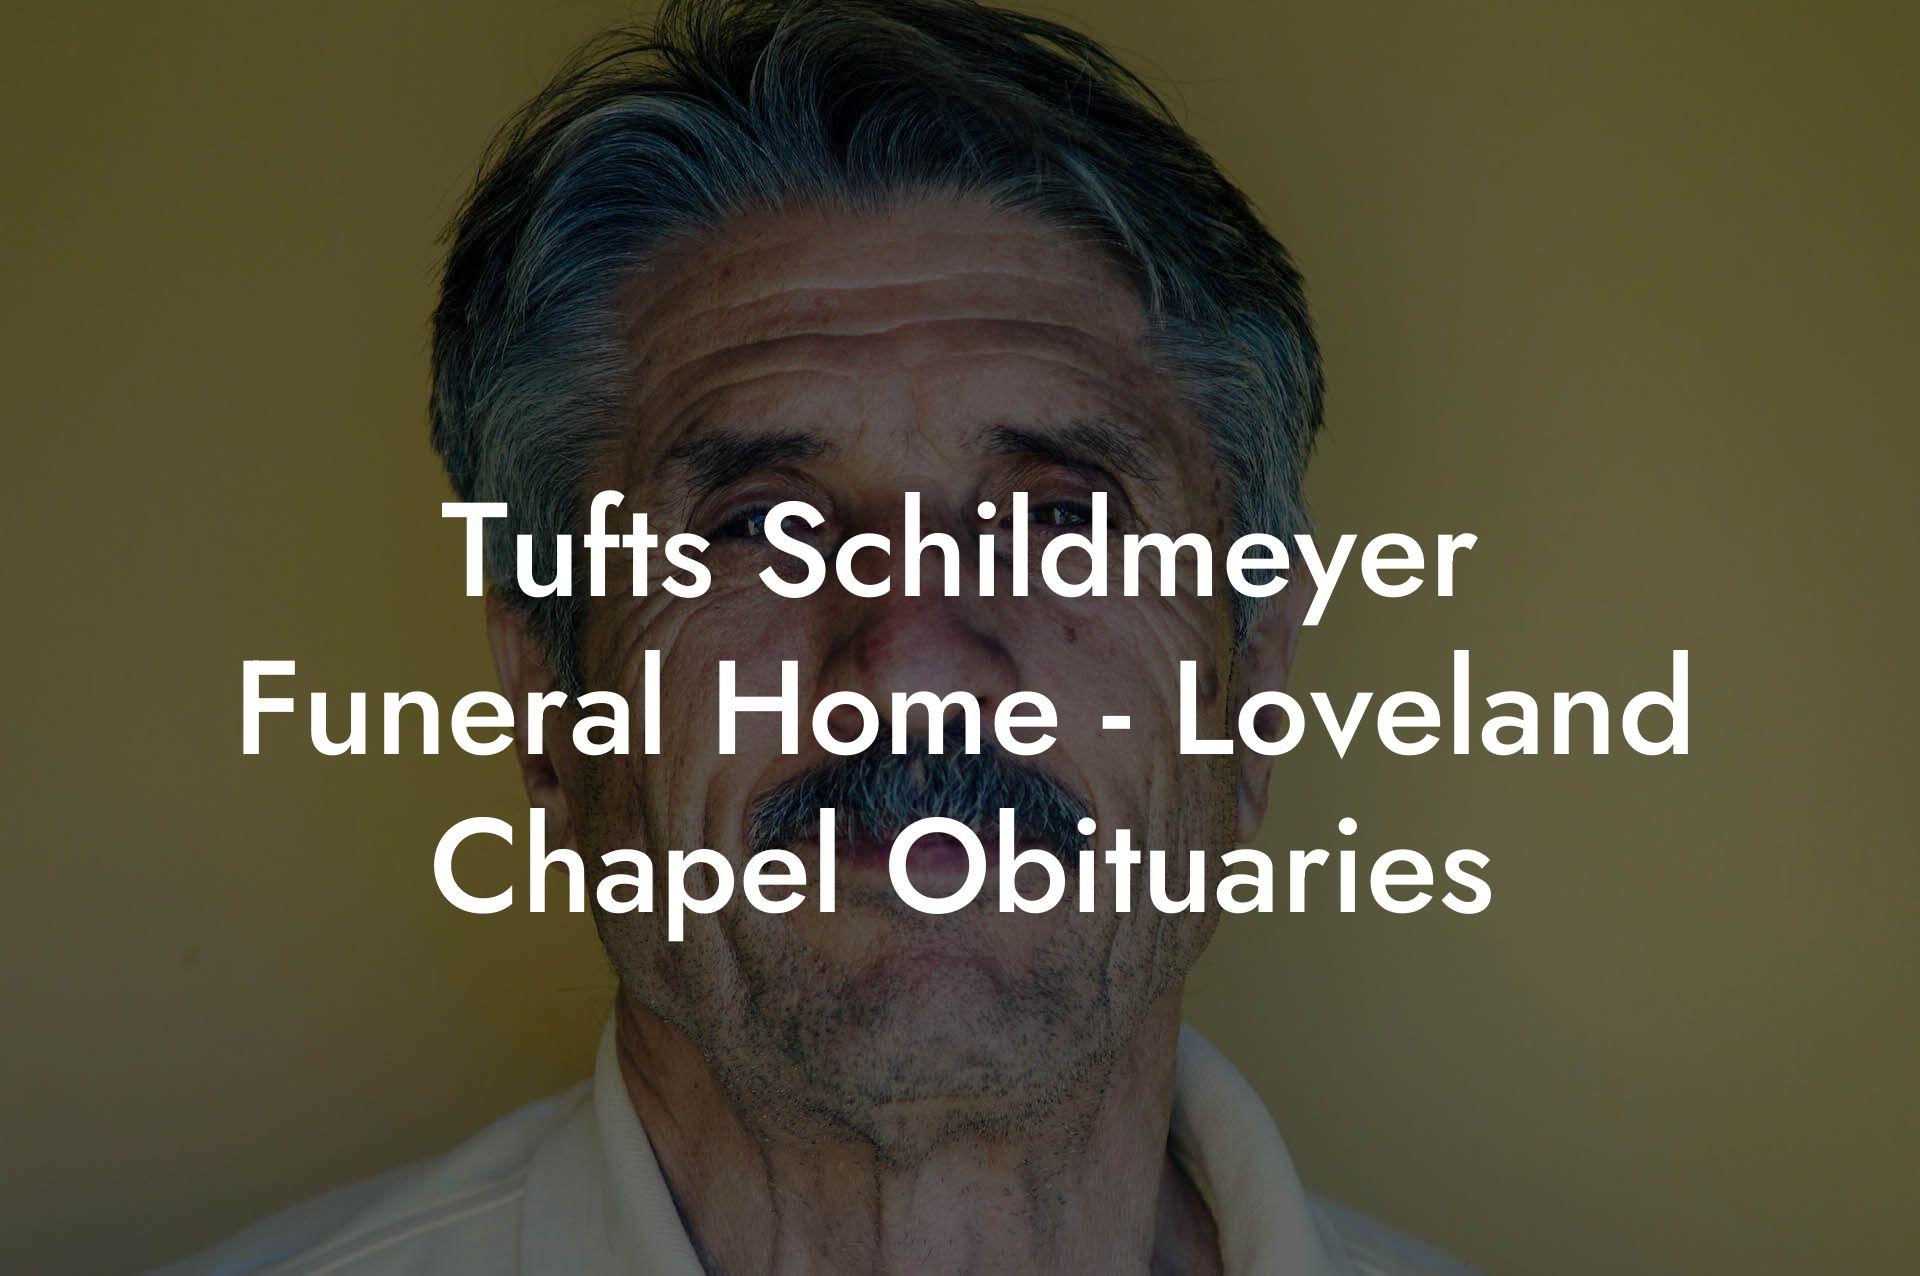 Tufts Schildmeyer Funeral Home - Loveland Chapel Obituaries